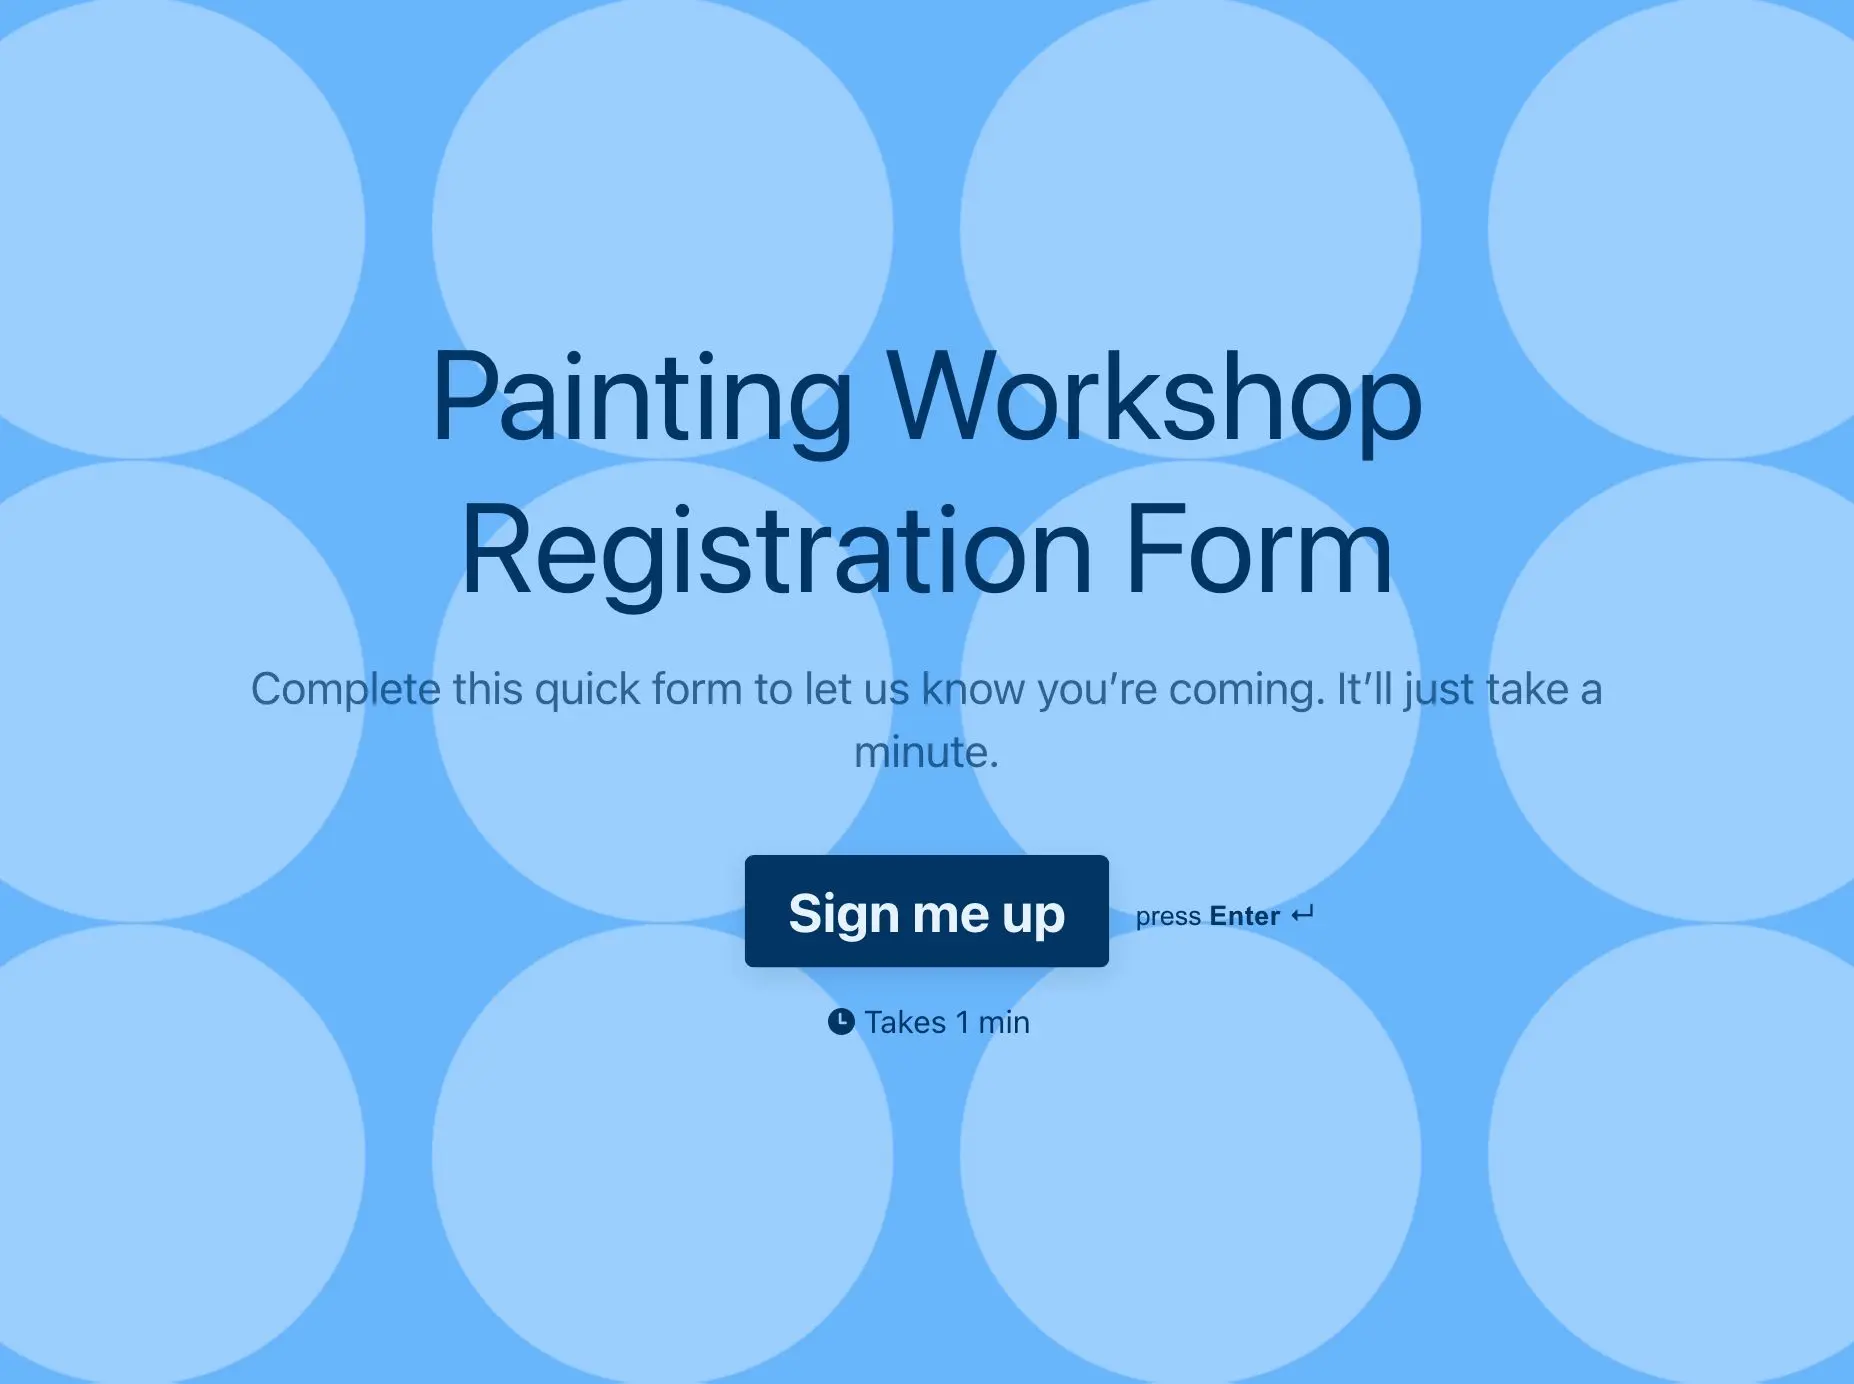 Painting Workshop Registration Form Template Hero